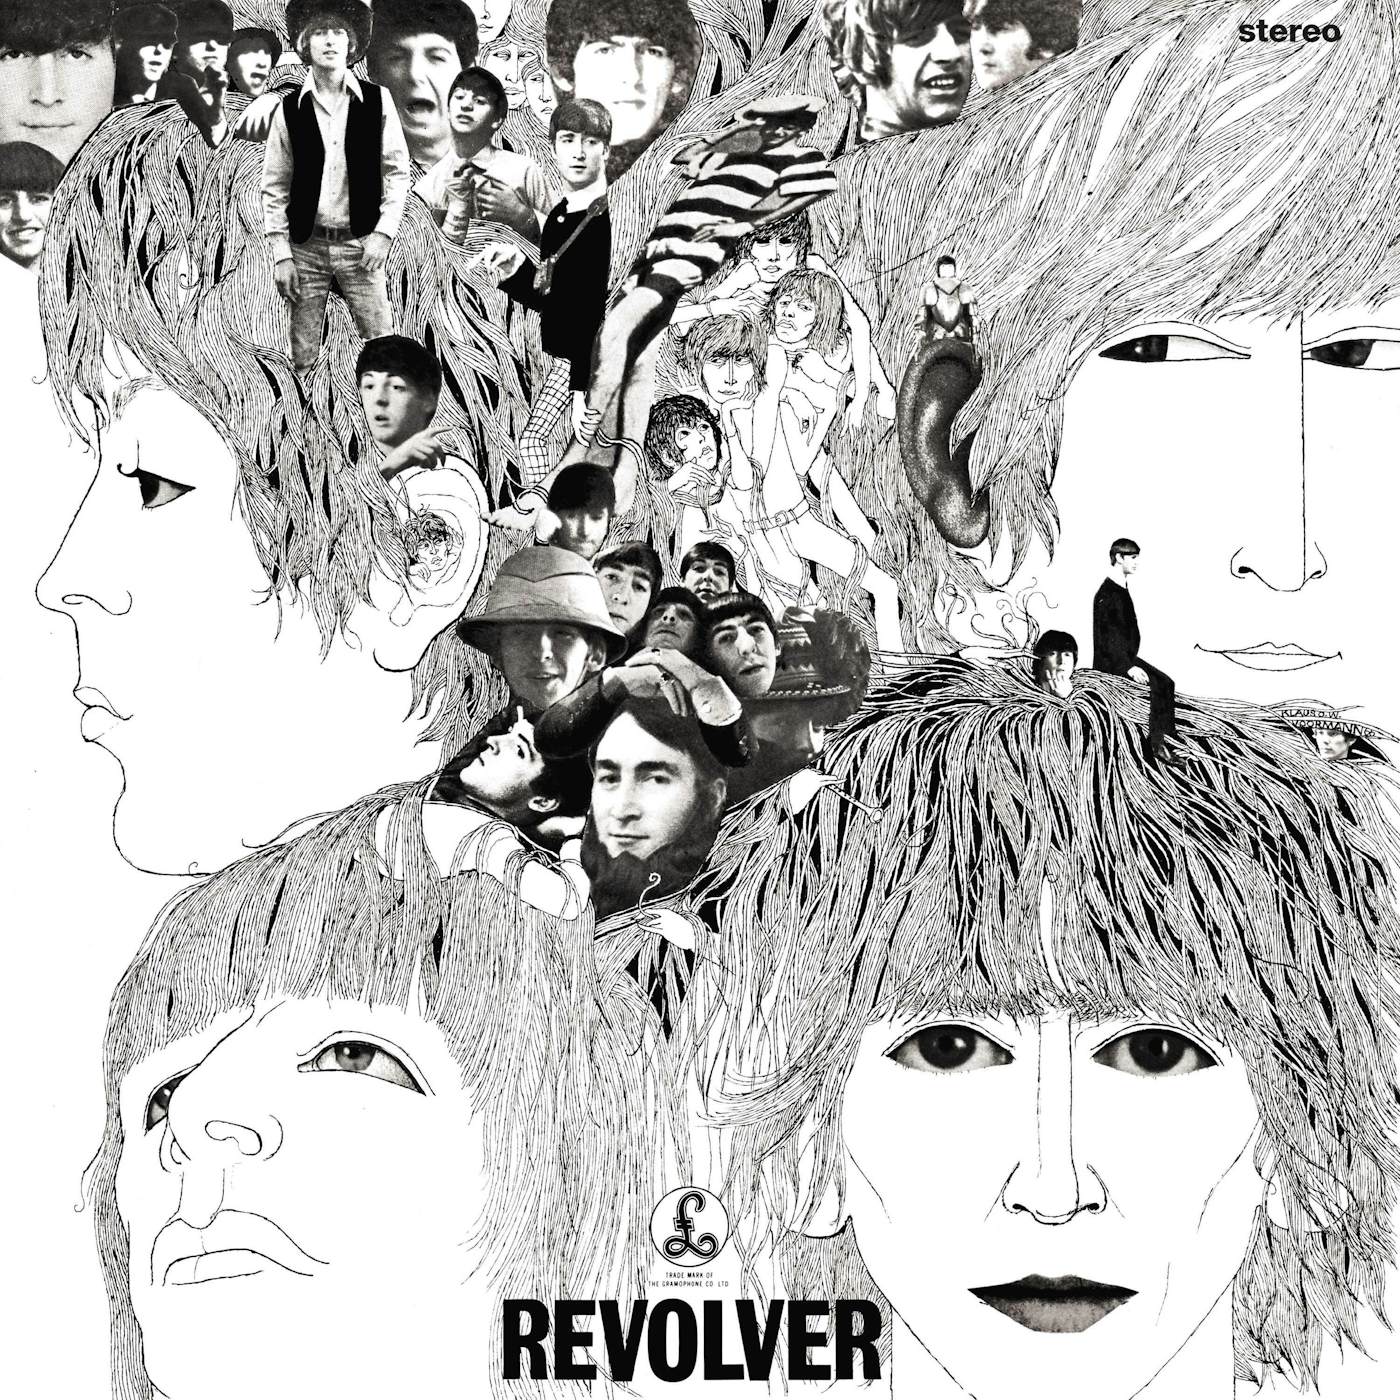 Beatles Original Record Purse:The Beatles - Revolver